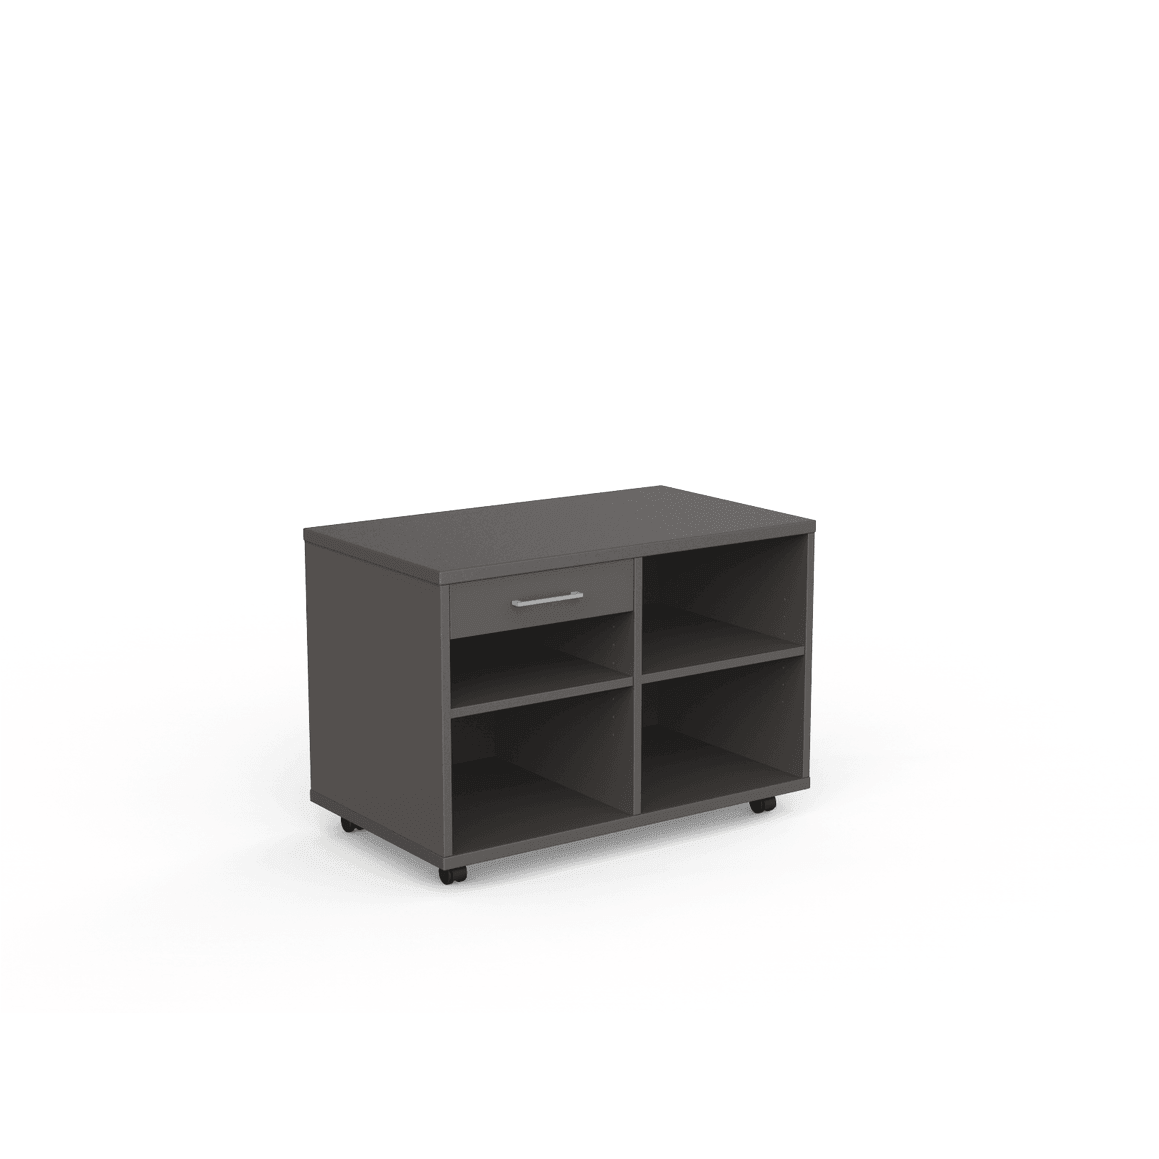 EkoSystem Drawer - Office Furniture Company 